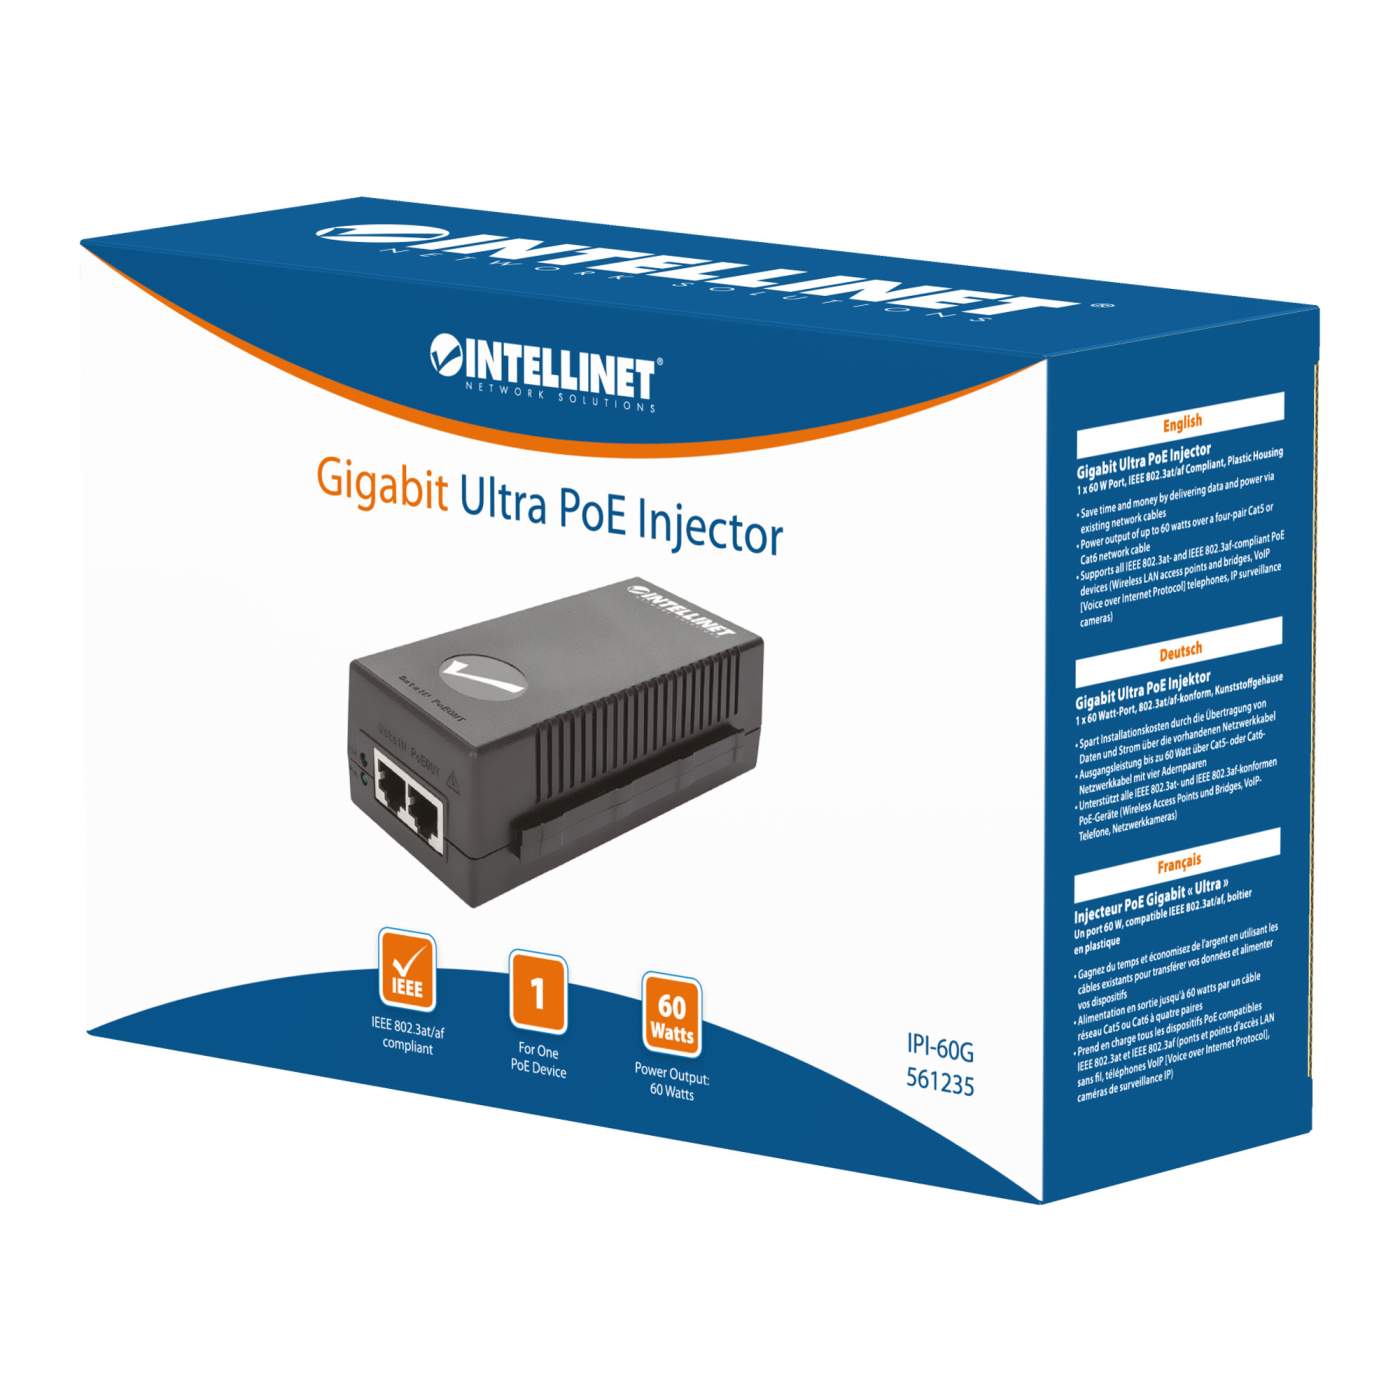 Gigabit Ultra PoE-Injektor Packaging Image 2